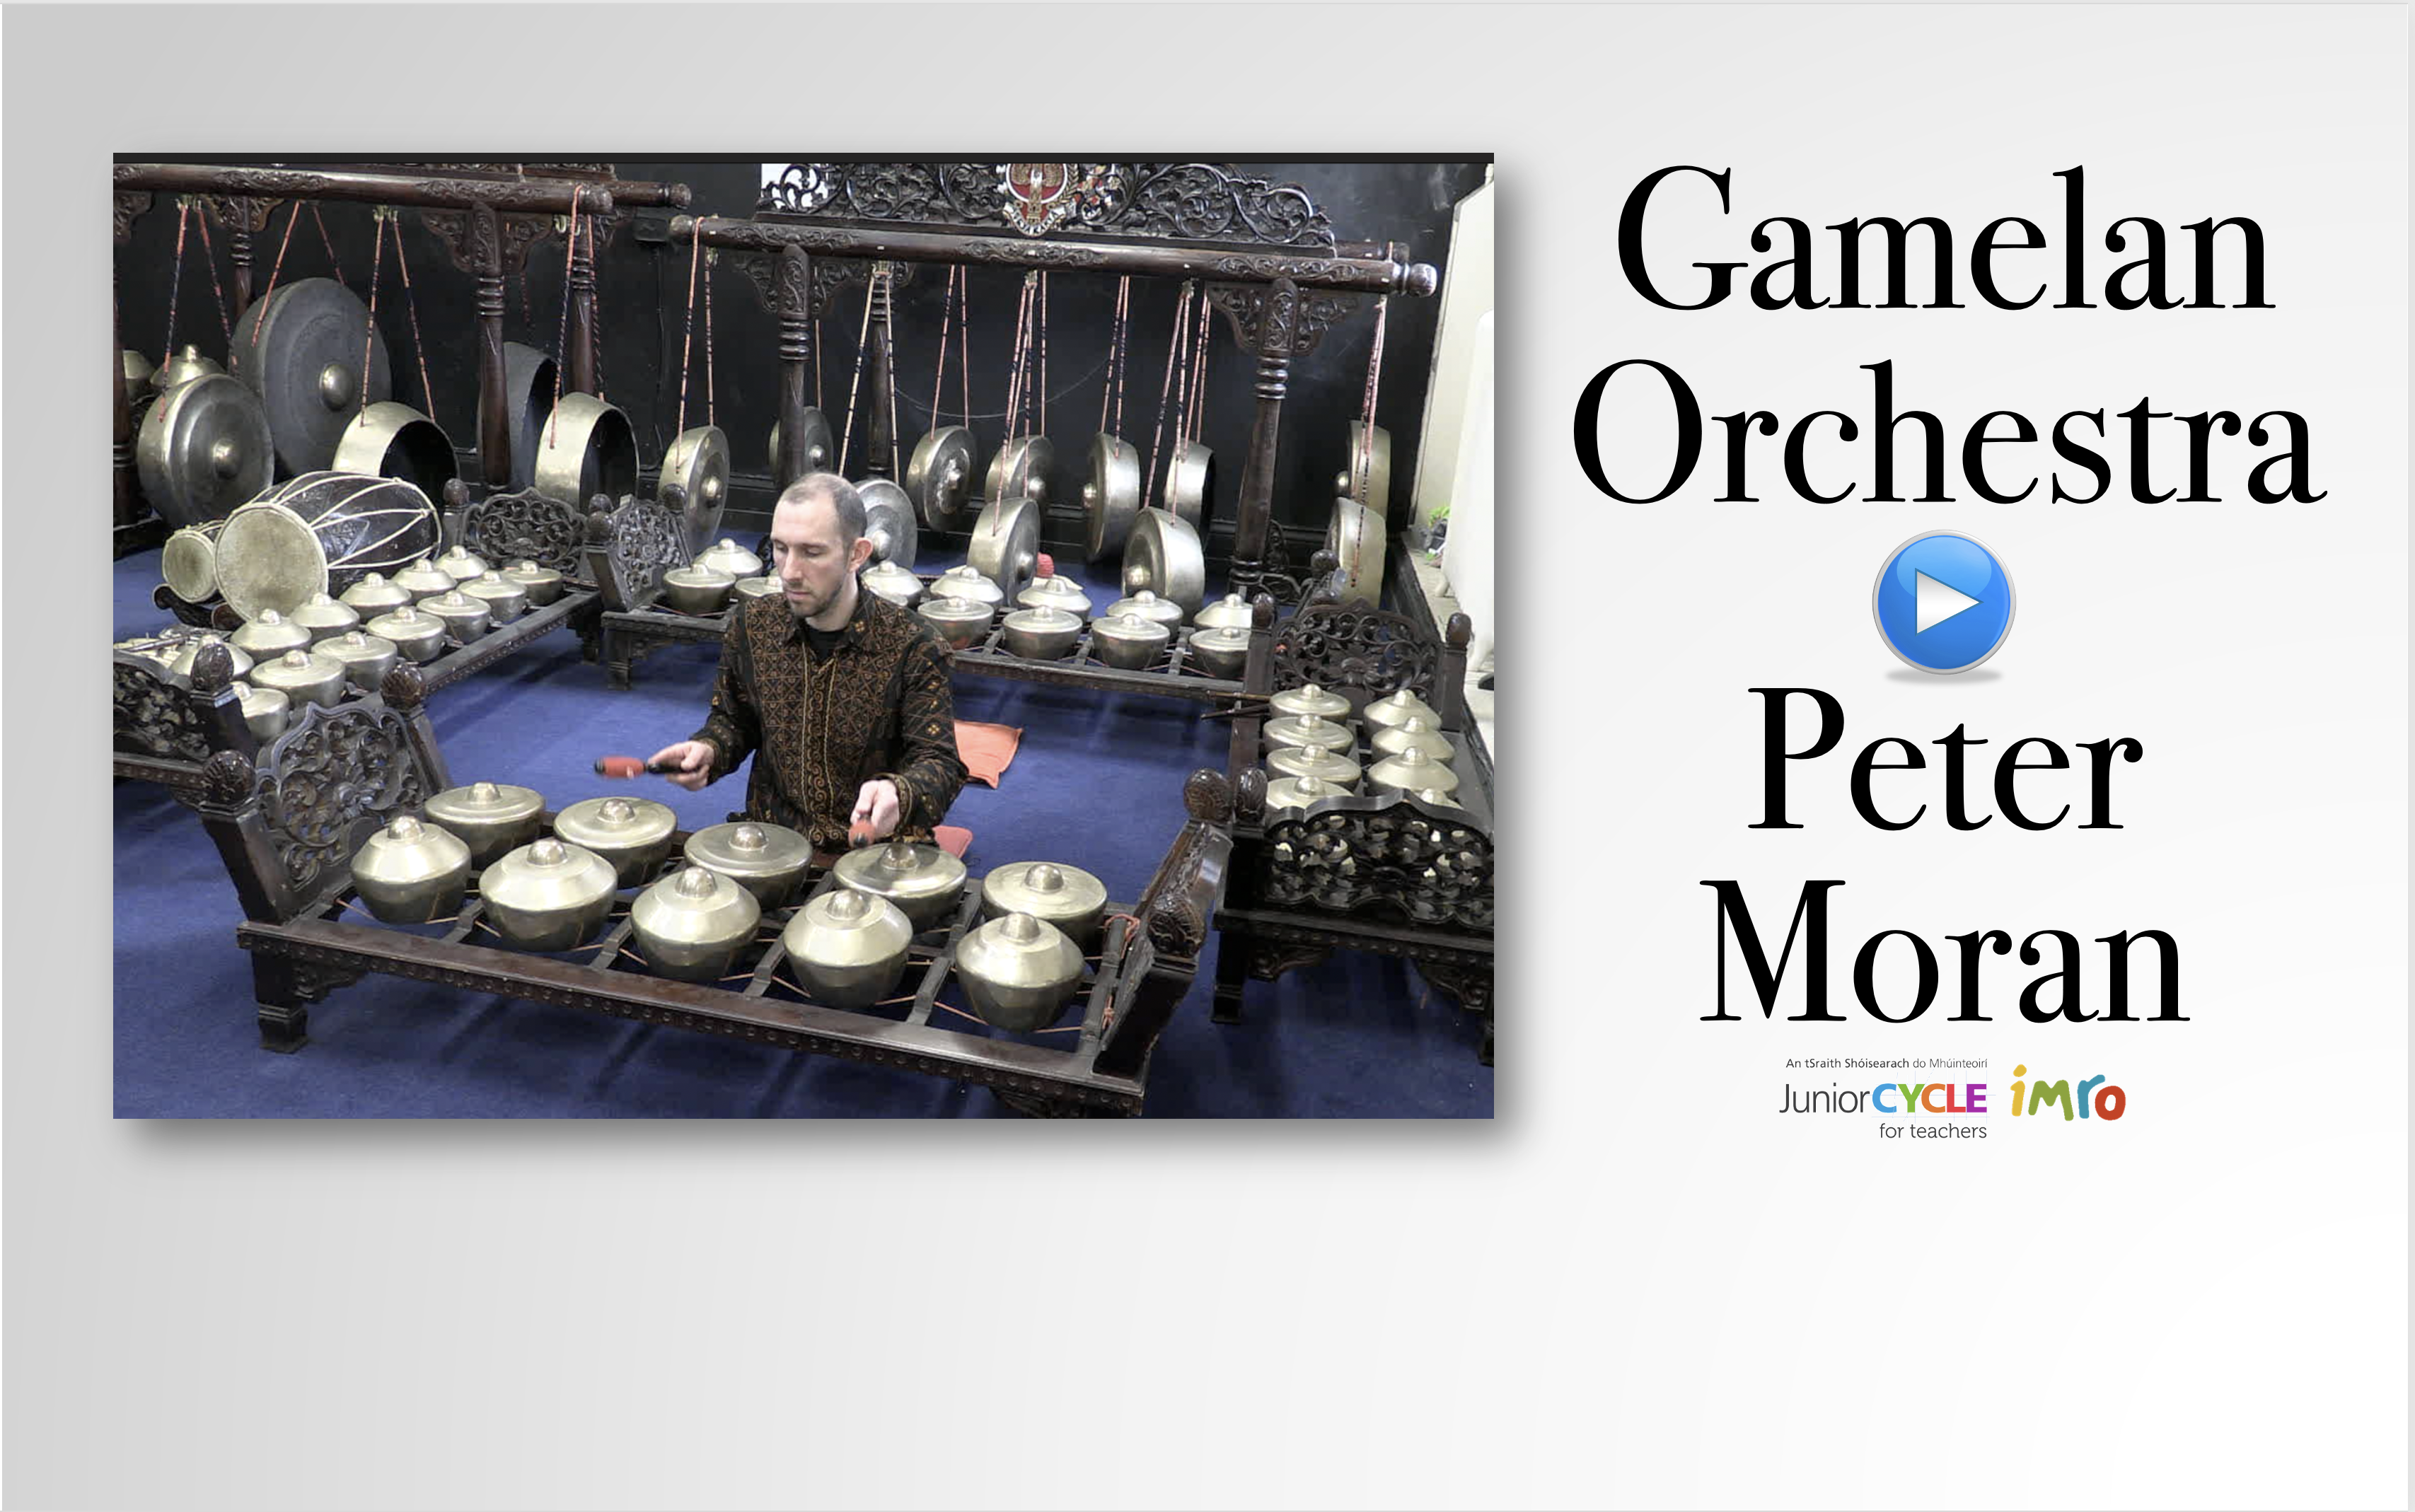 Meet the Gamelan Orchestra